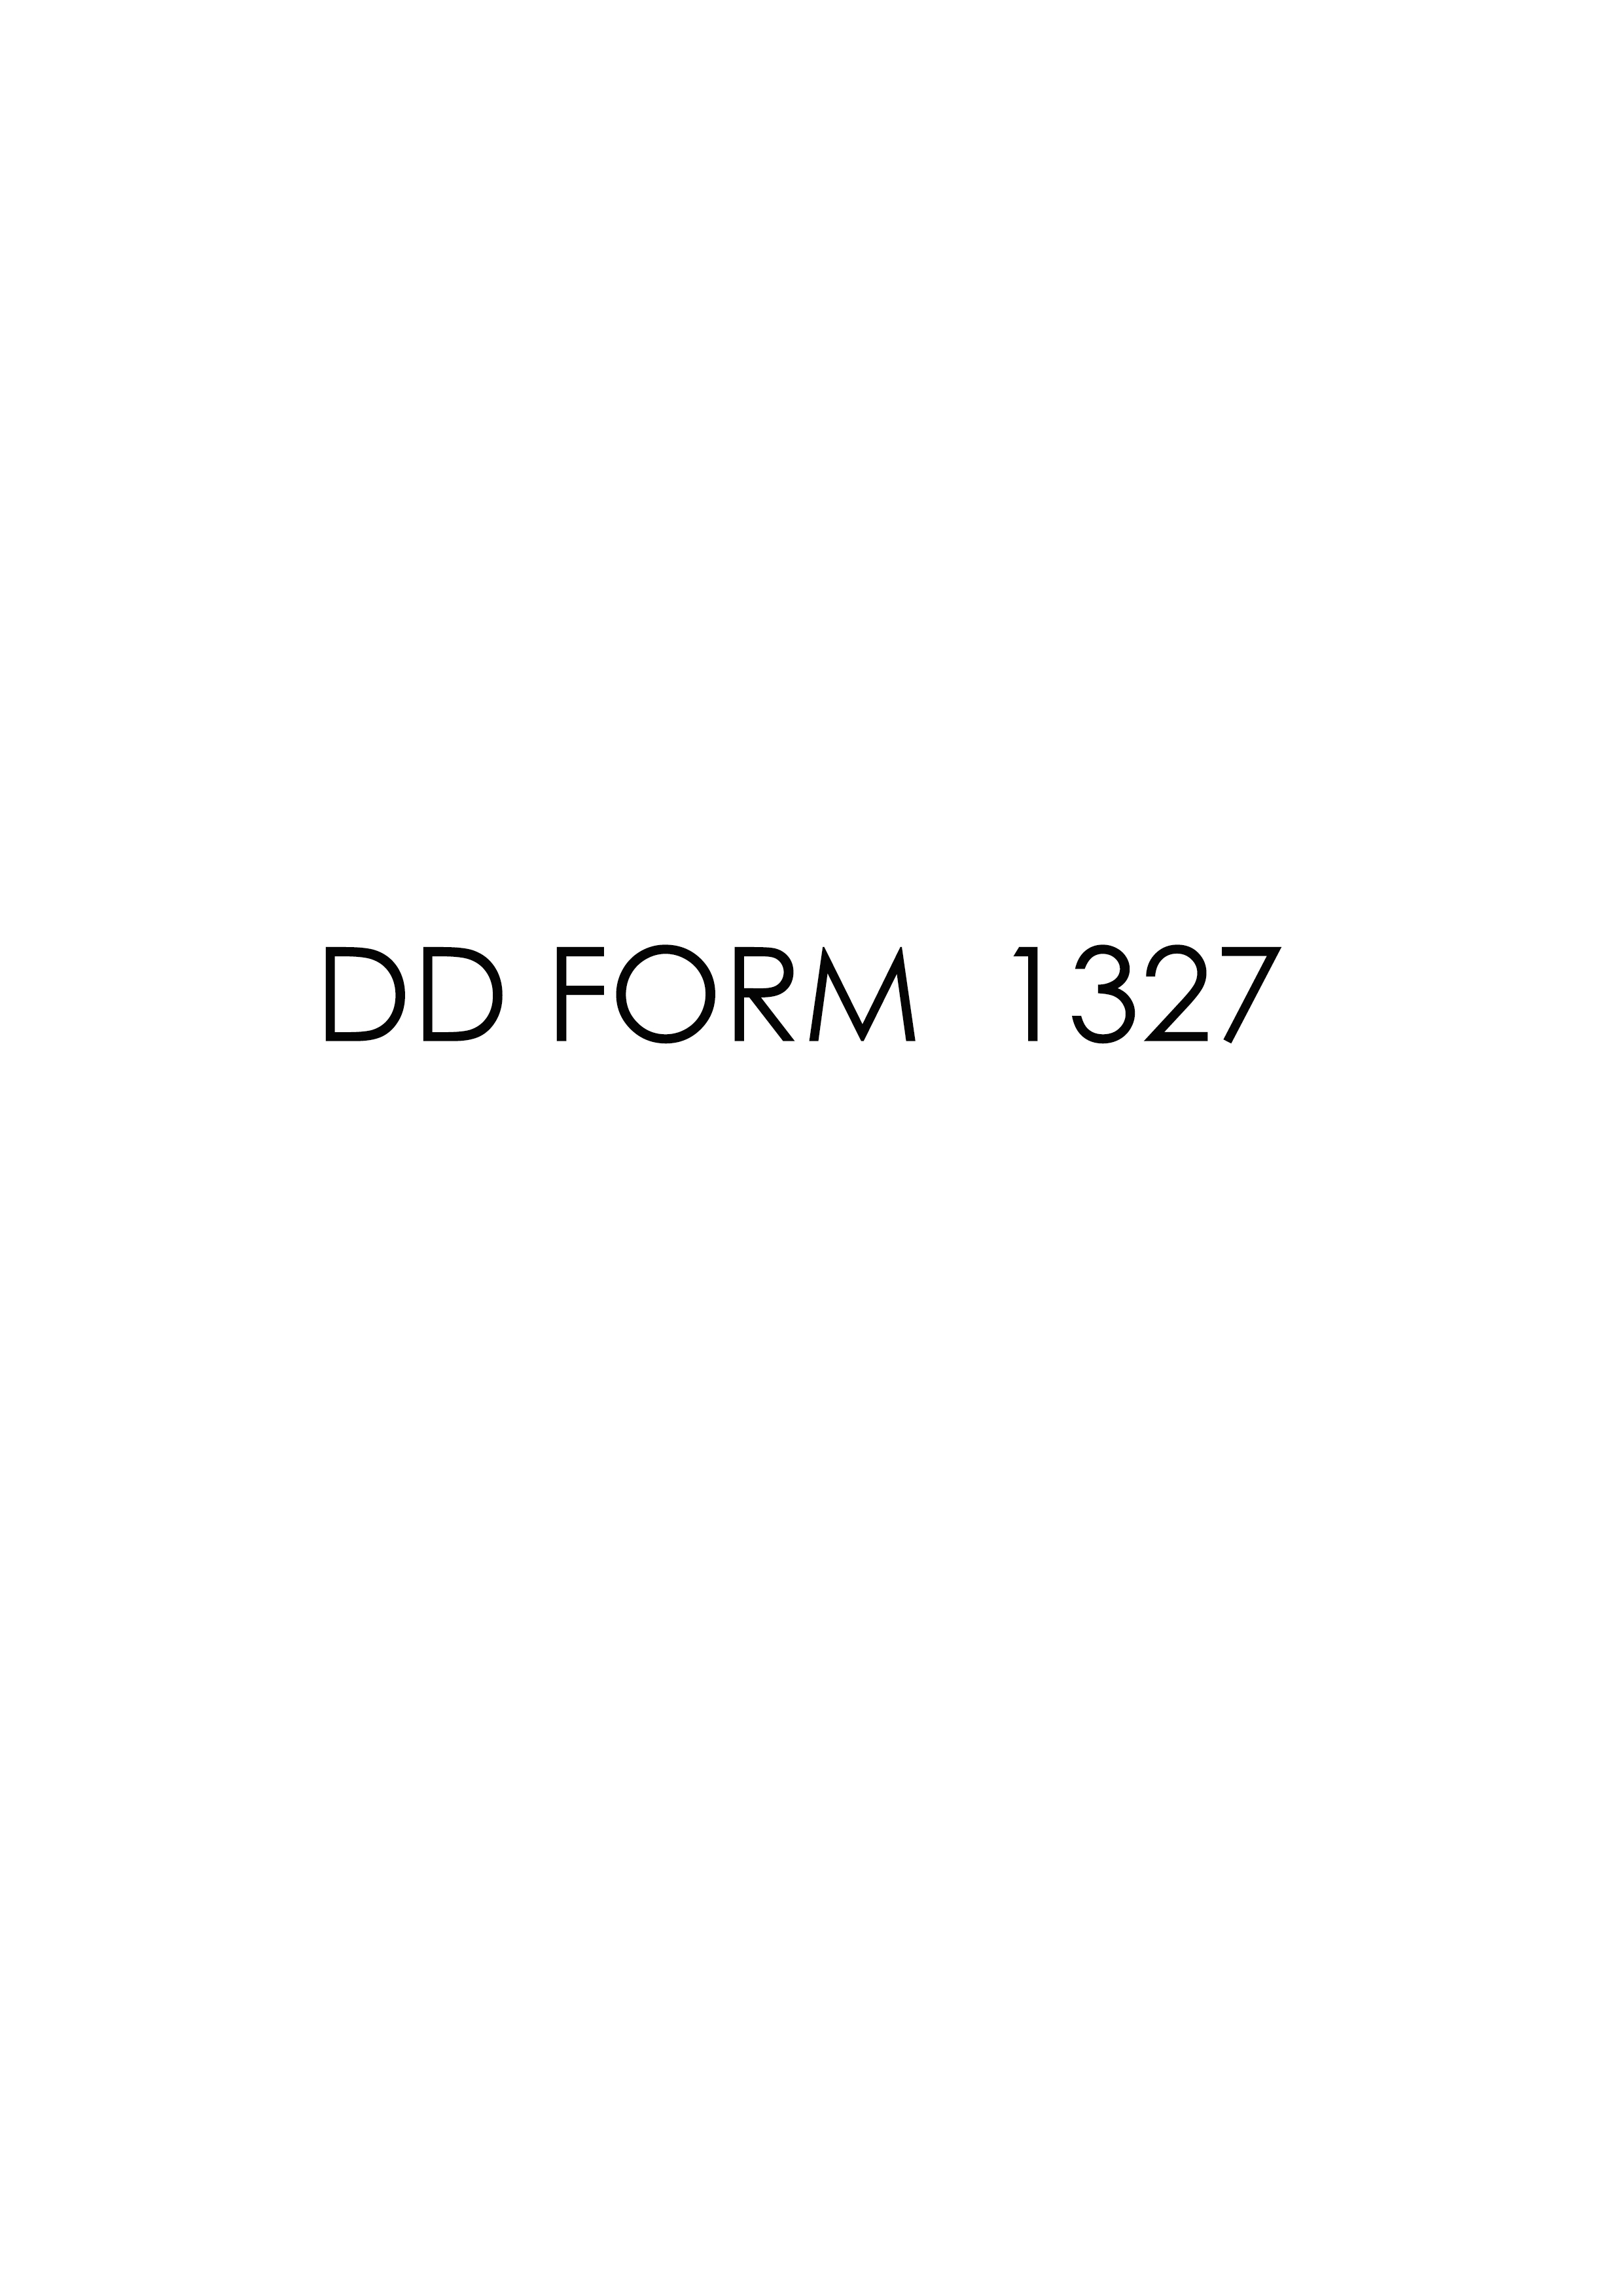 Download dd Form 1327